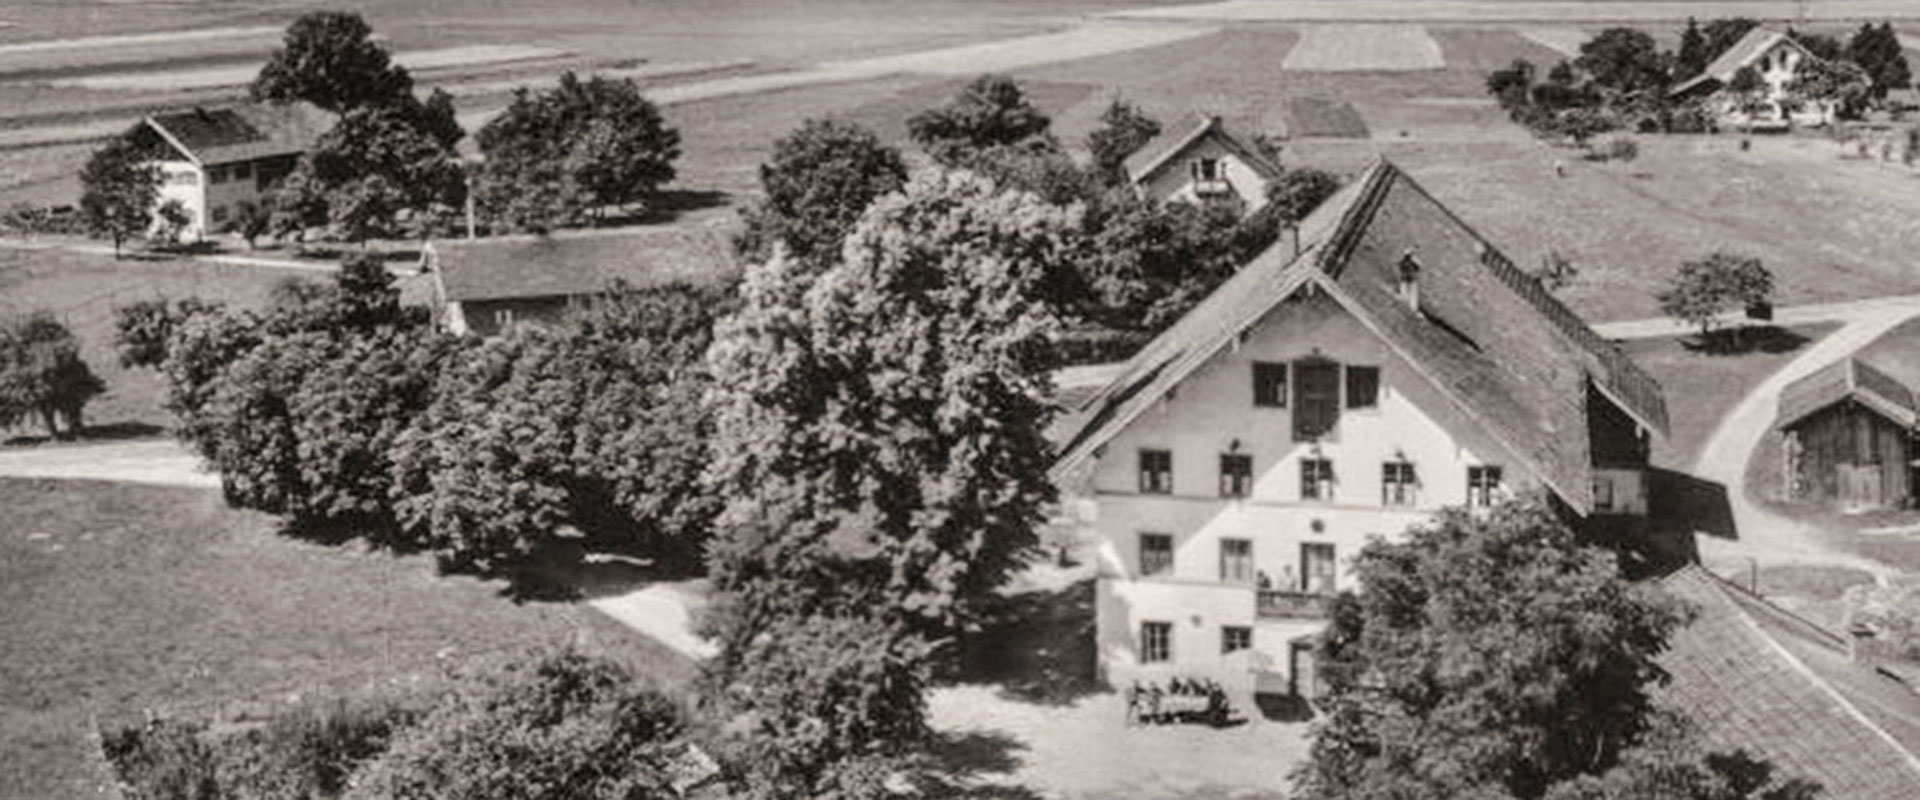 Landgasthof Goriwirt - 1945